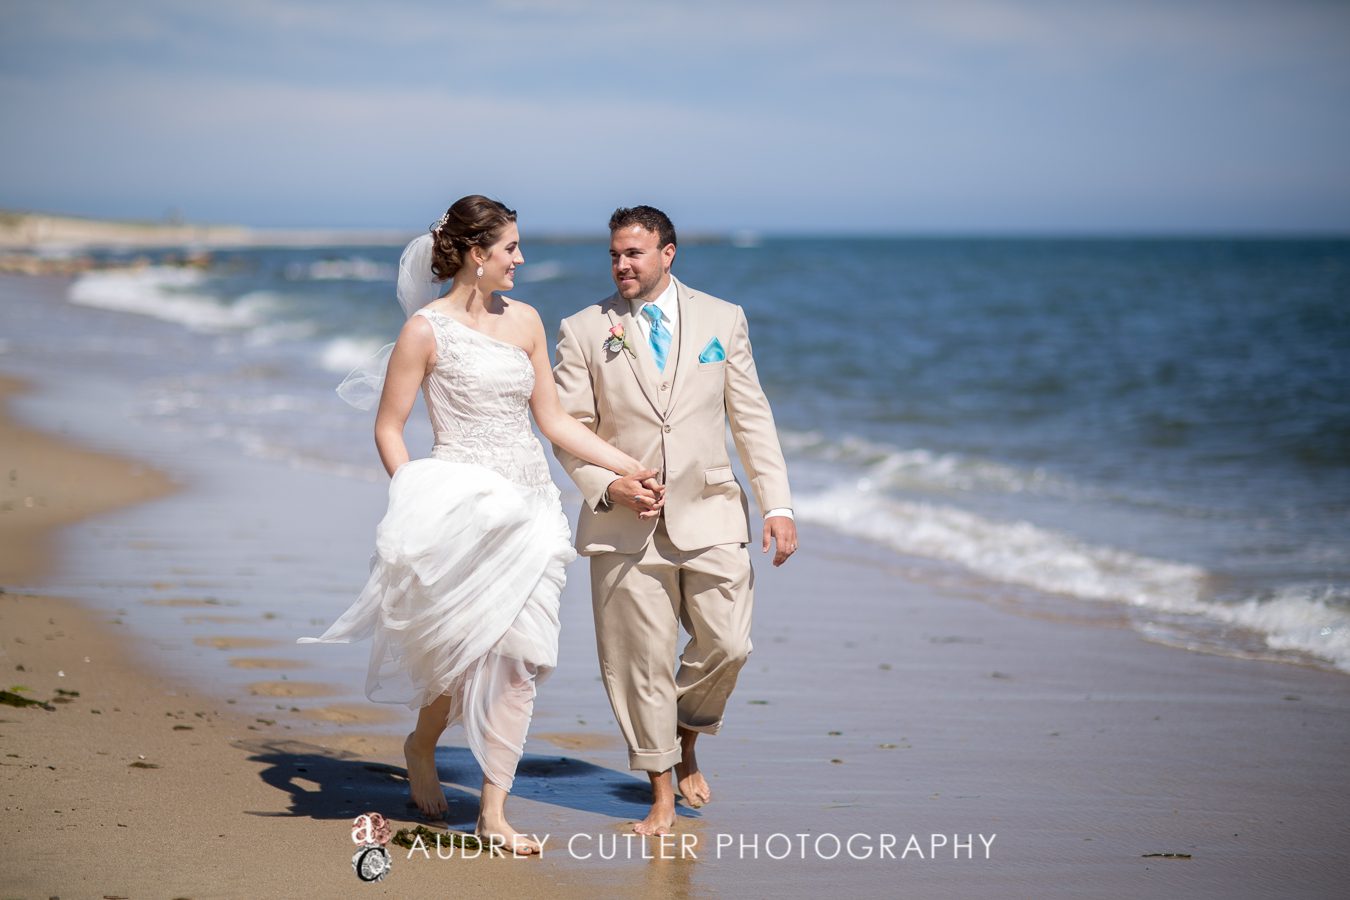 Cape Cod Beaches - Dennis Port, Massachusetts Wedding Photographers - © Audrey Cutler Photography 2014